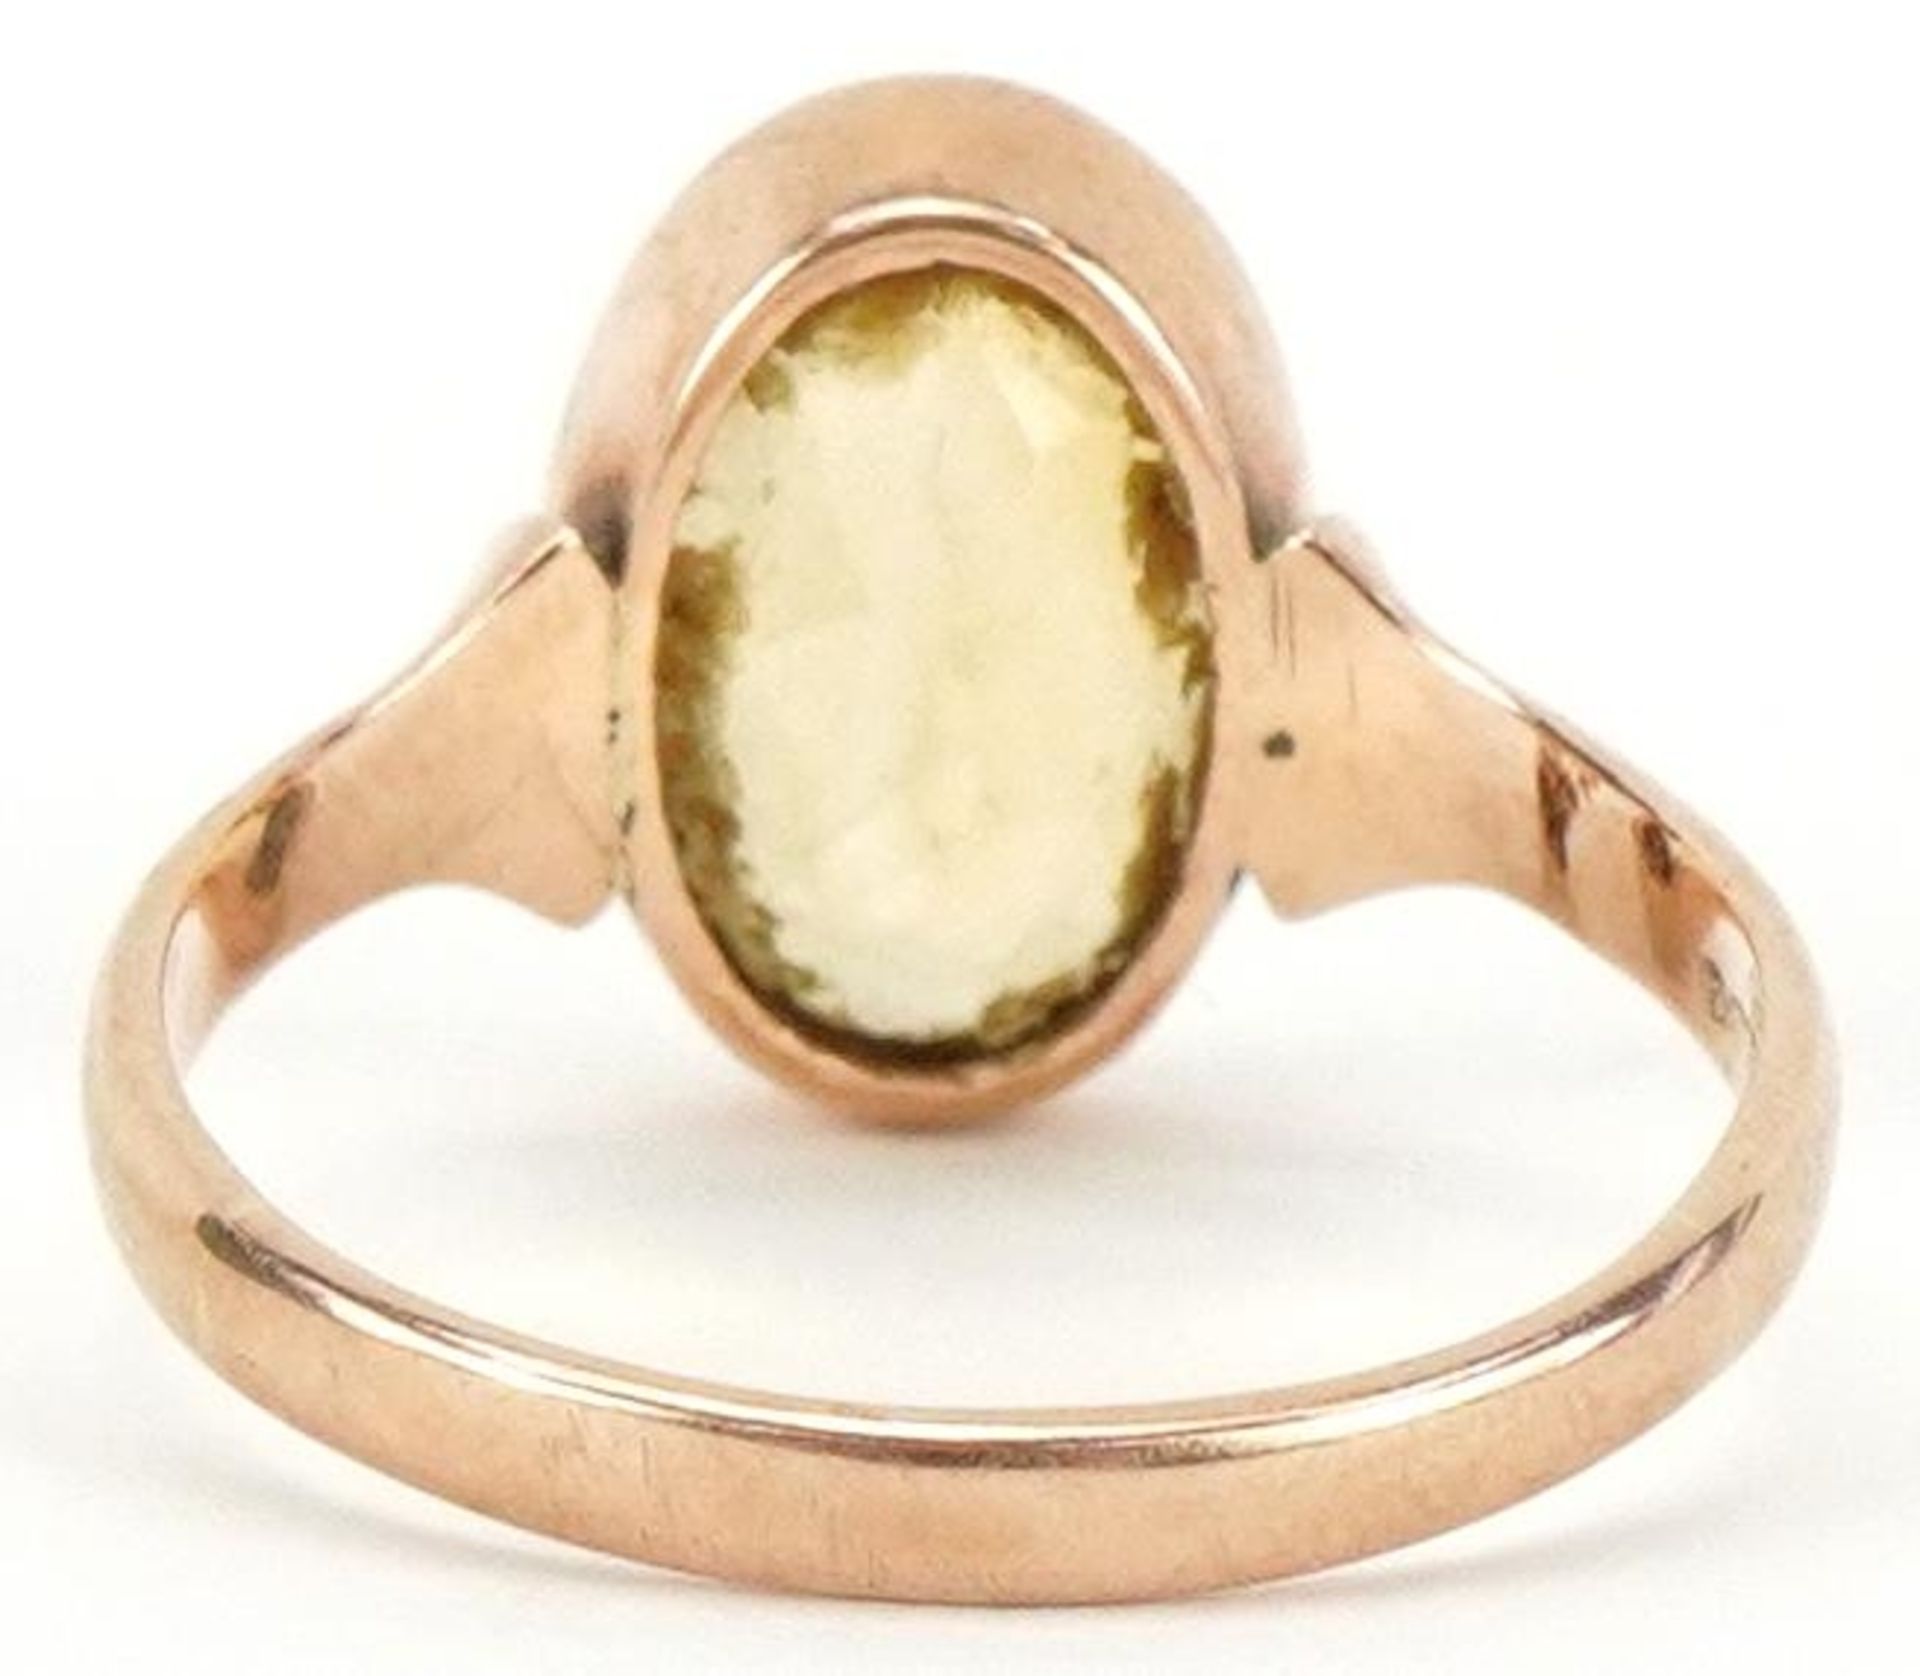 9ct rose gold citrine ring, size K, 2.5g - Image 2 of 6